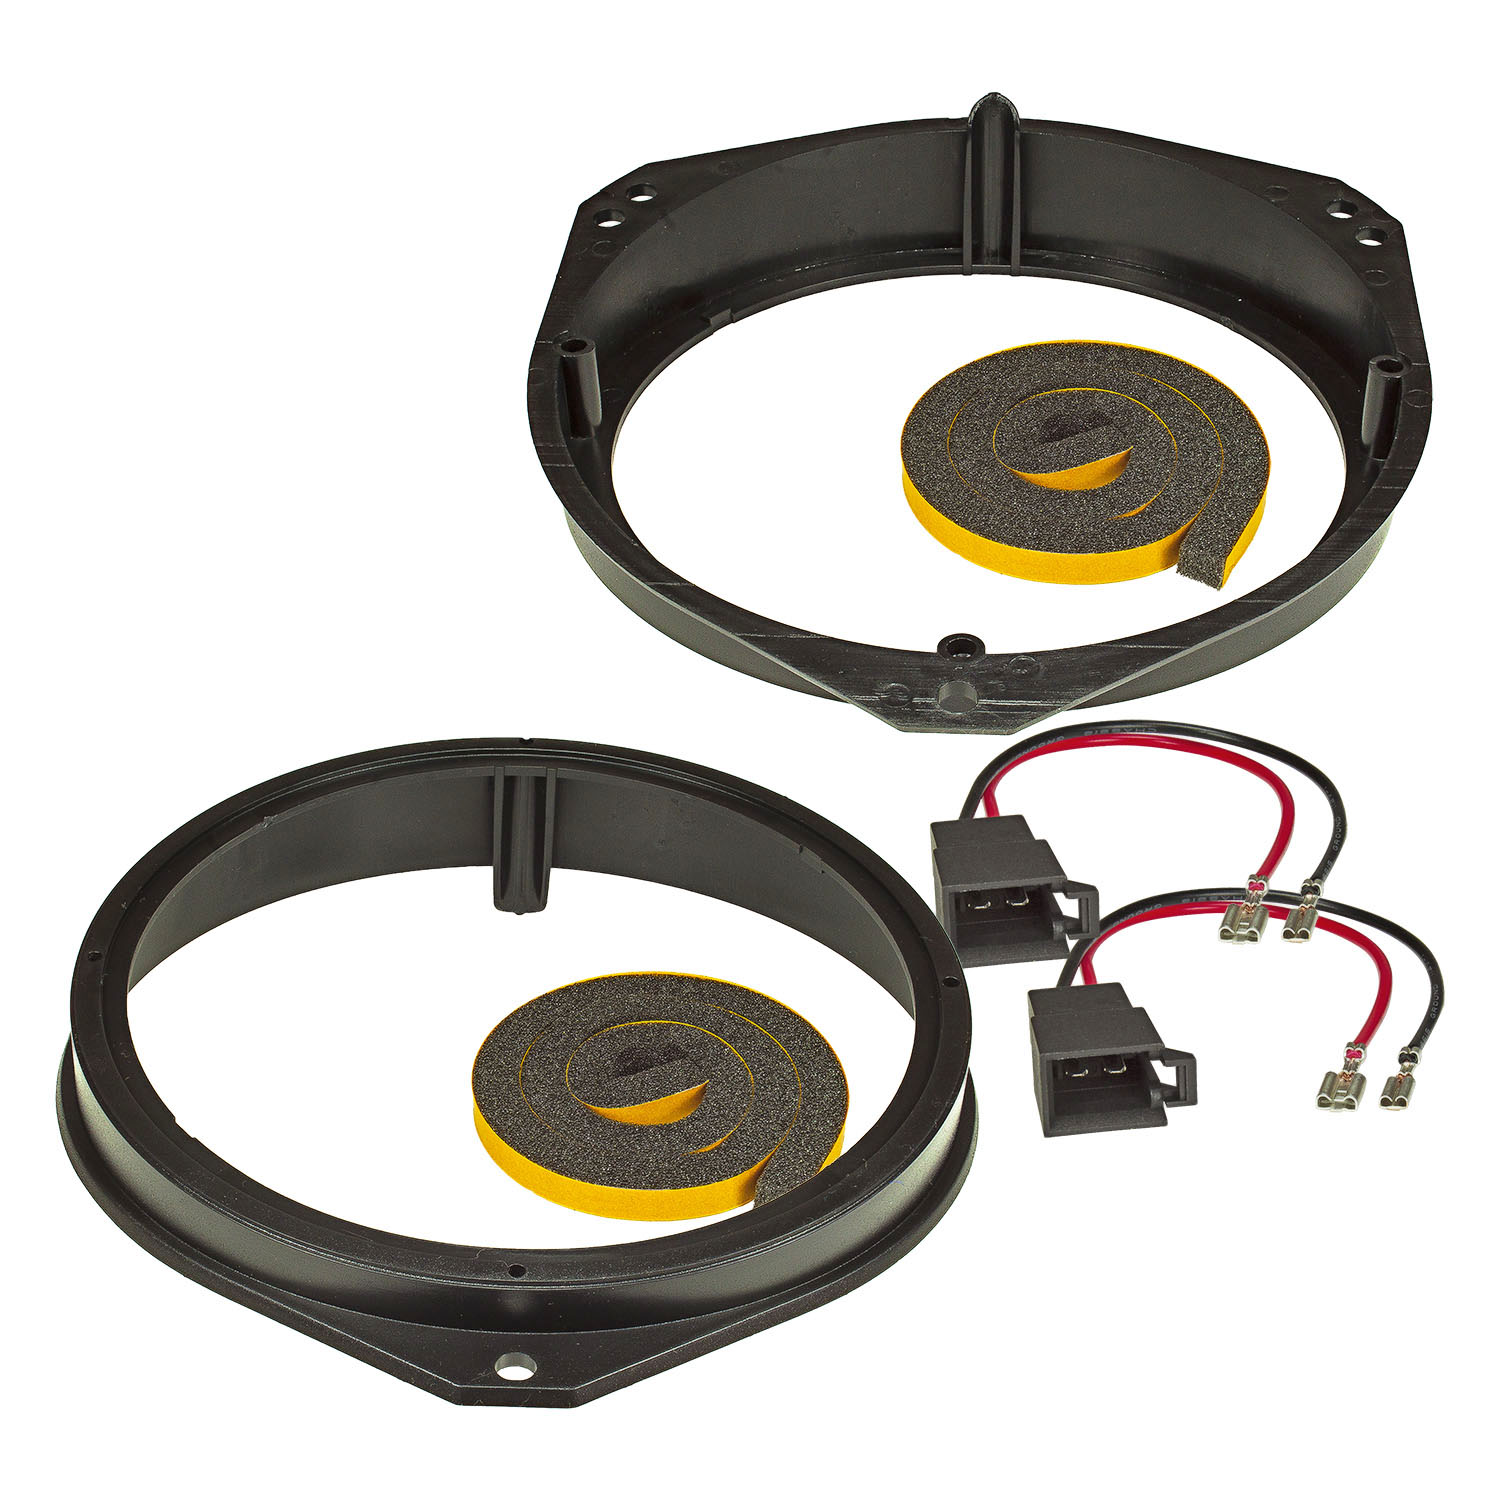 Lautsprecher Adapter Set kompatibel mit Opel Renault Nissan Corsa Combo Tigra Meriva Vivaro Trafic Primastar Ringe + Adapterkabel adaptiert auf 165er Lautsprecher